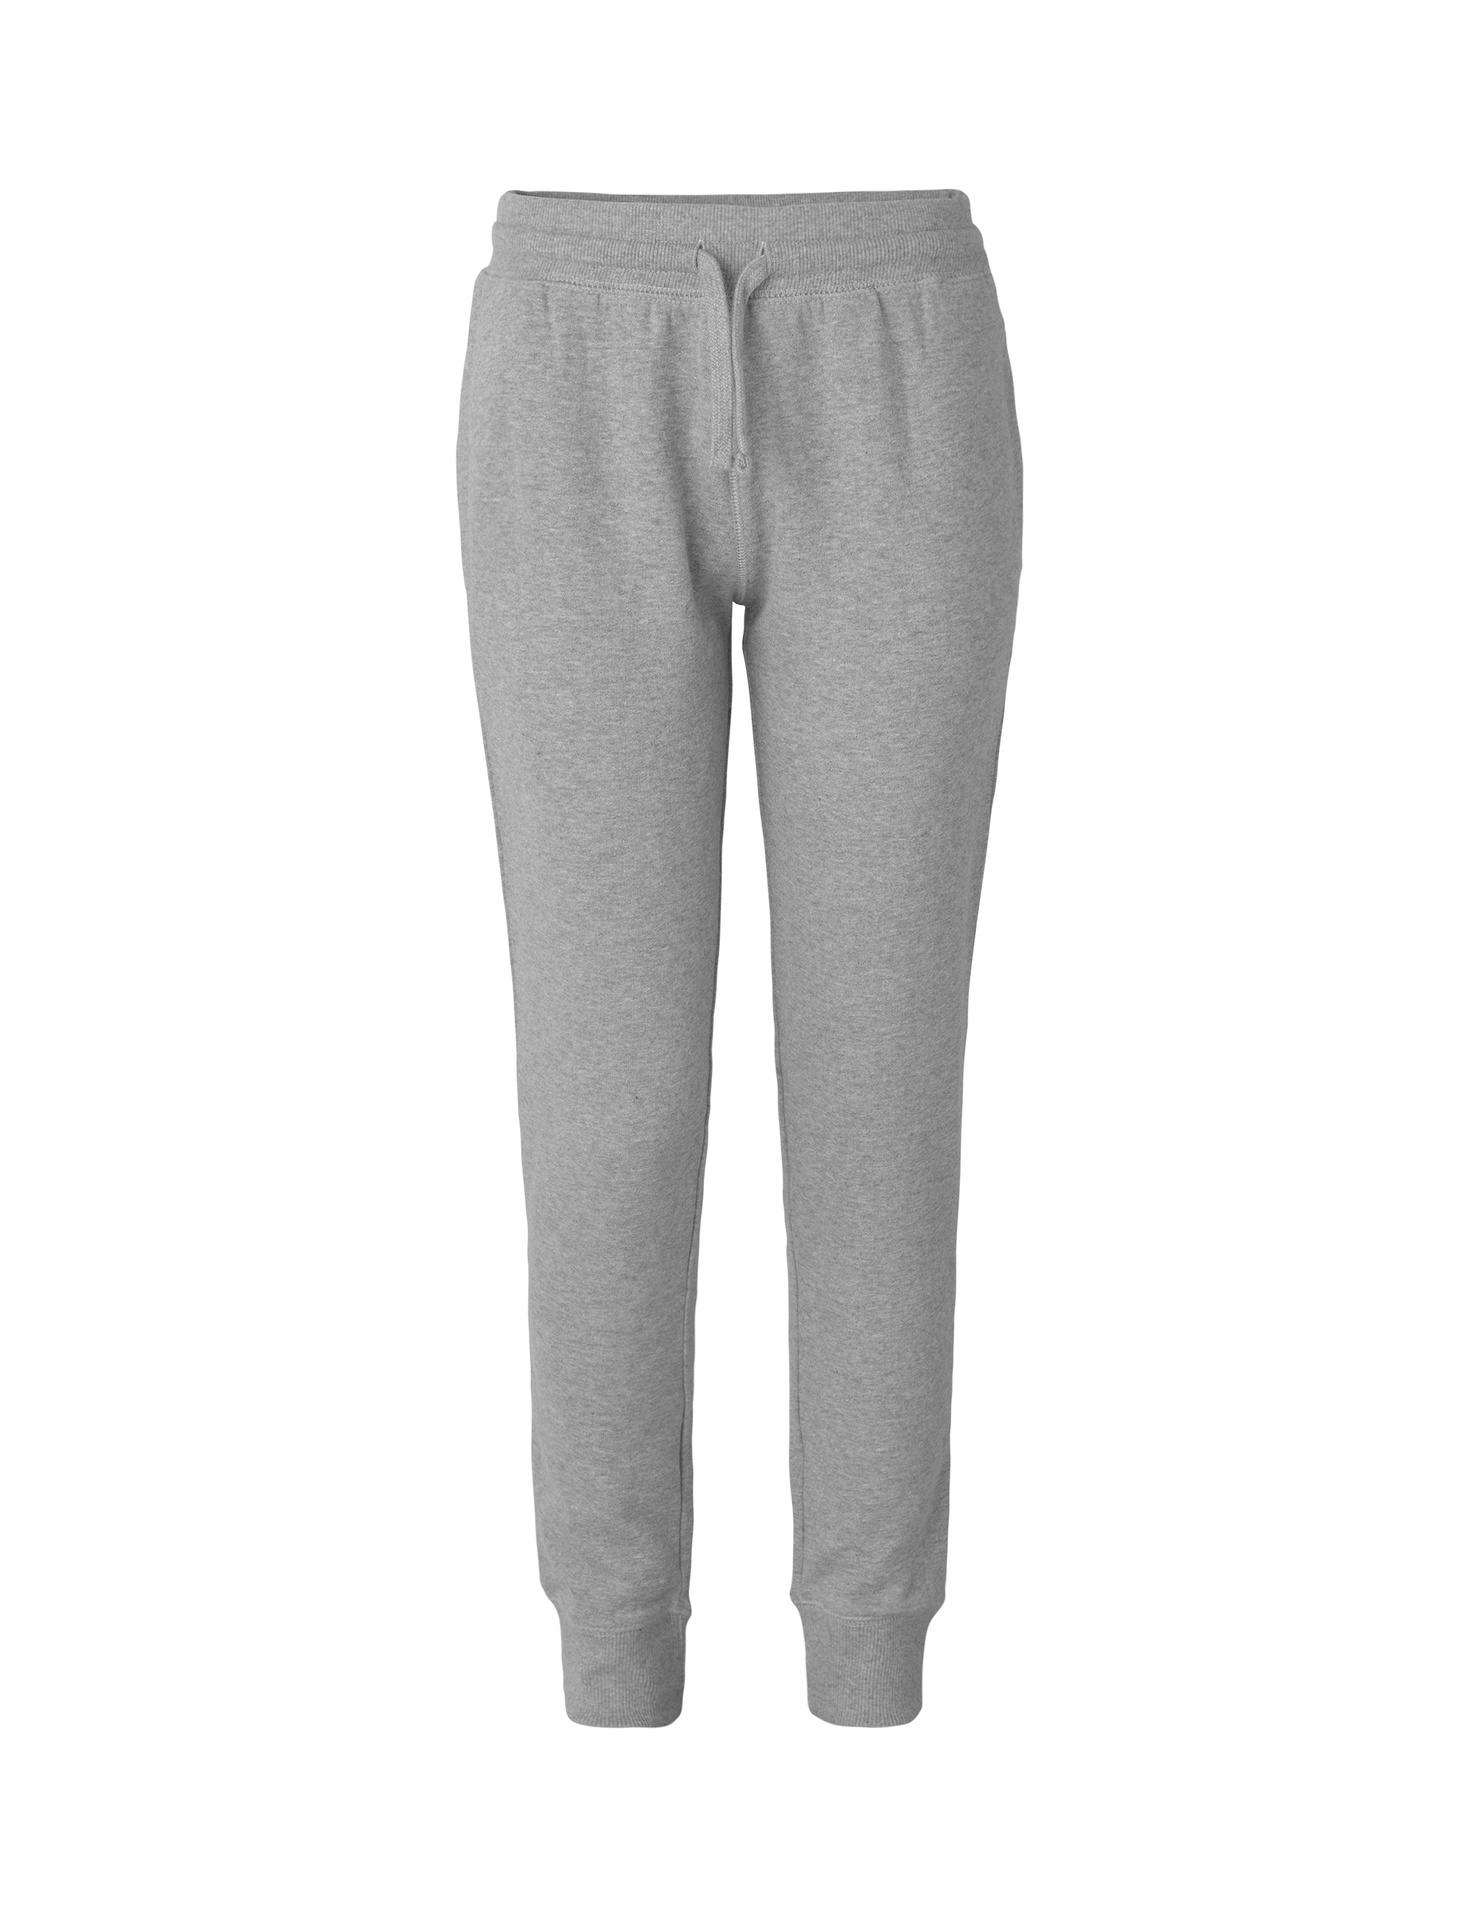 [PR/05571] Kids Sweatpants (Sport Grey 21, 104/110 cm)